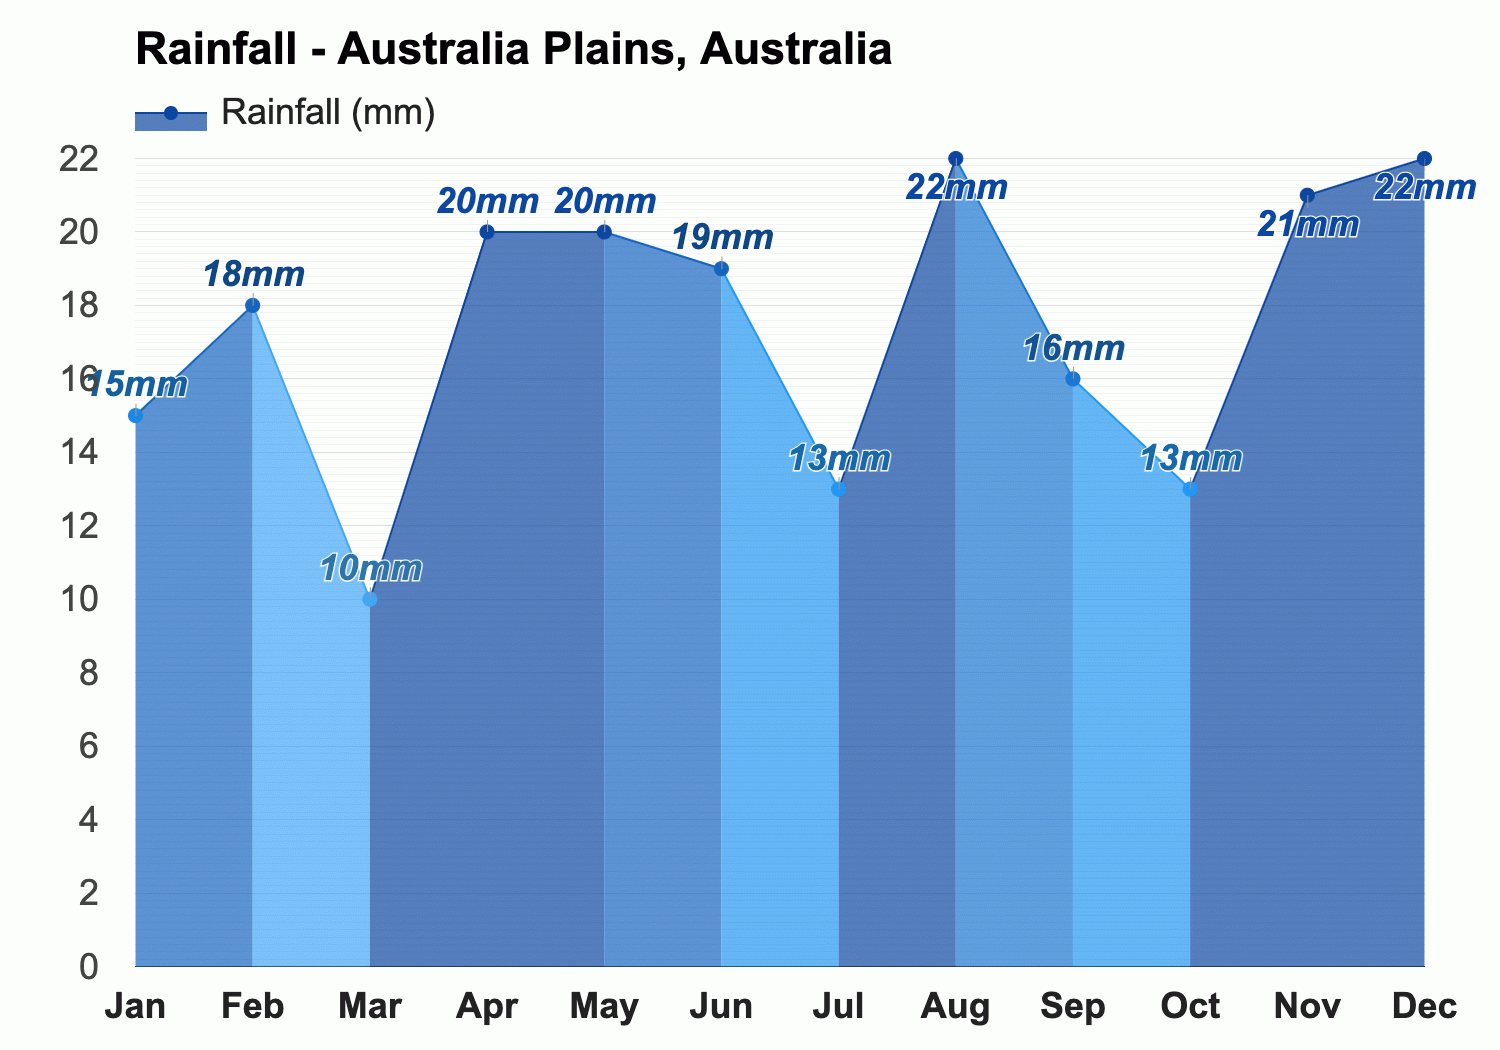 Australia Plains, Australia - Climate & Monthly weather forecast